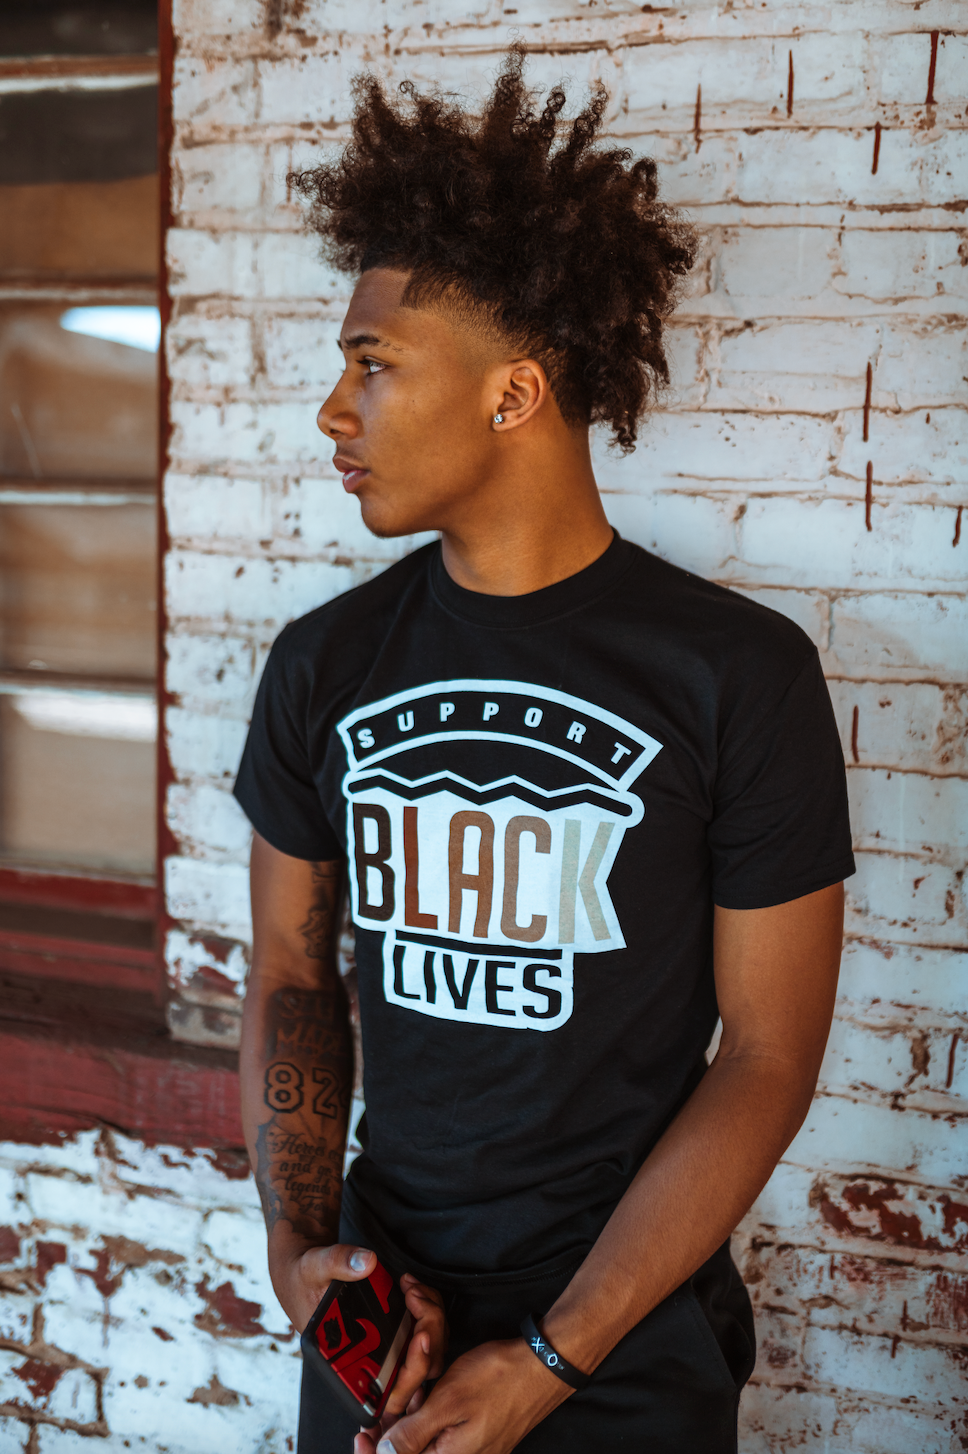 Support Black Lives T-Shirt